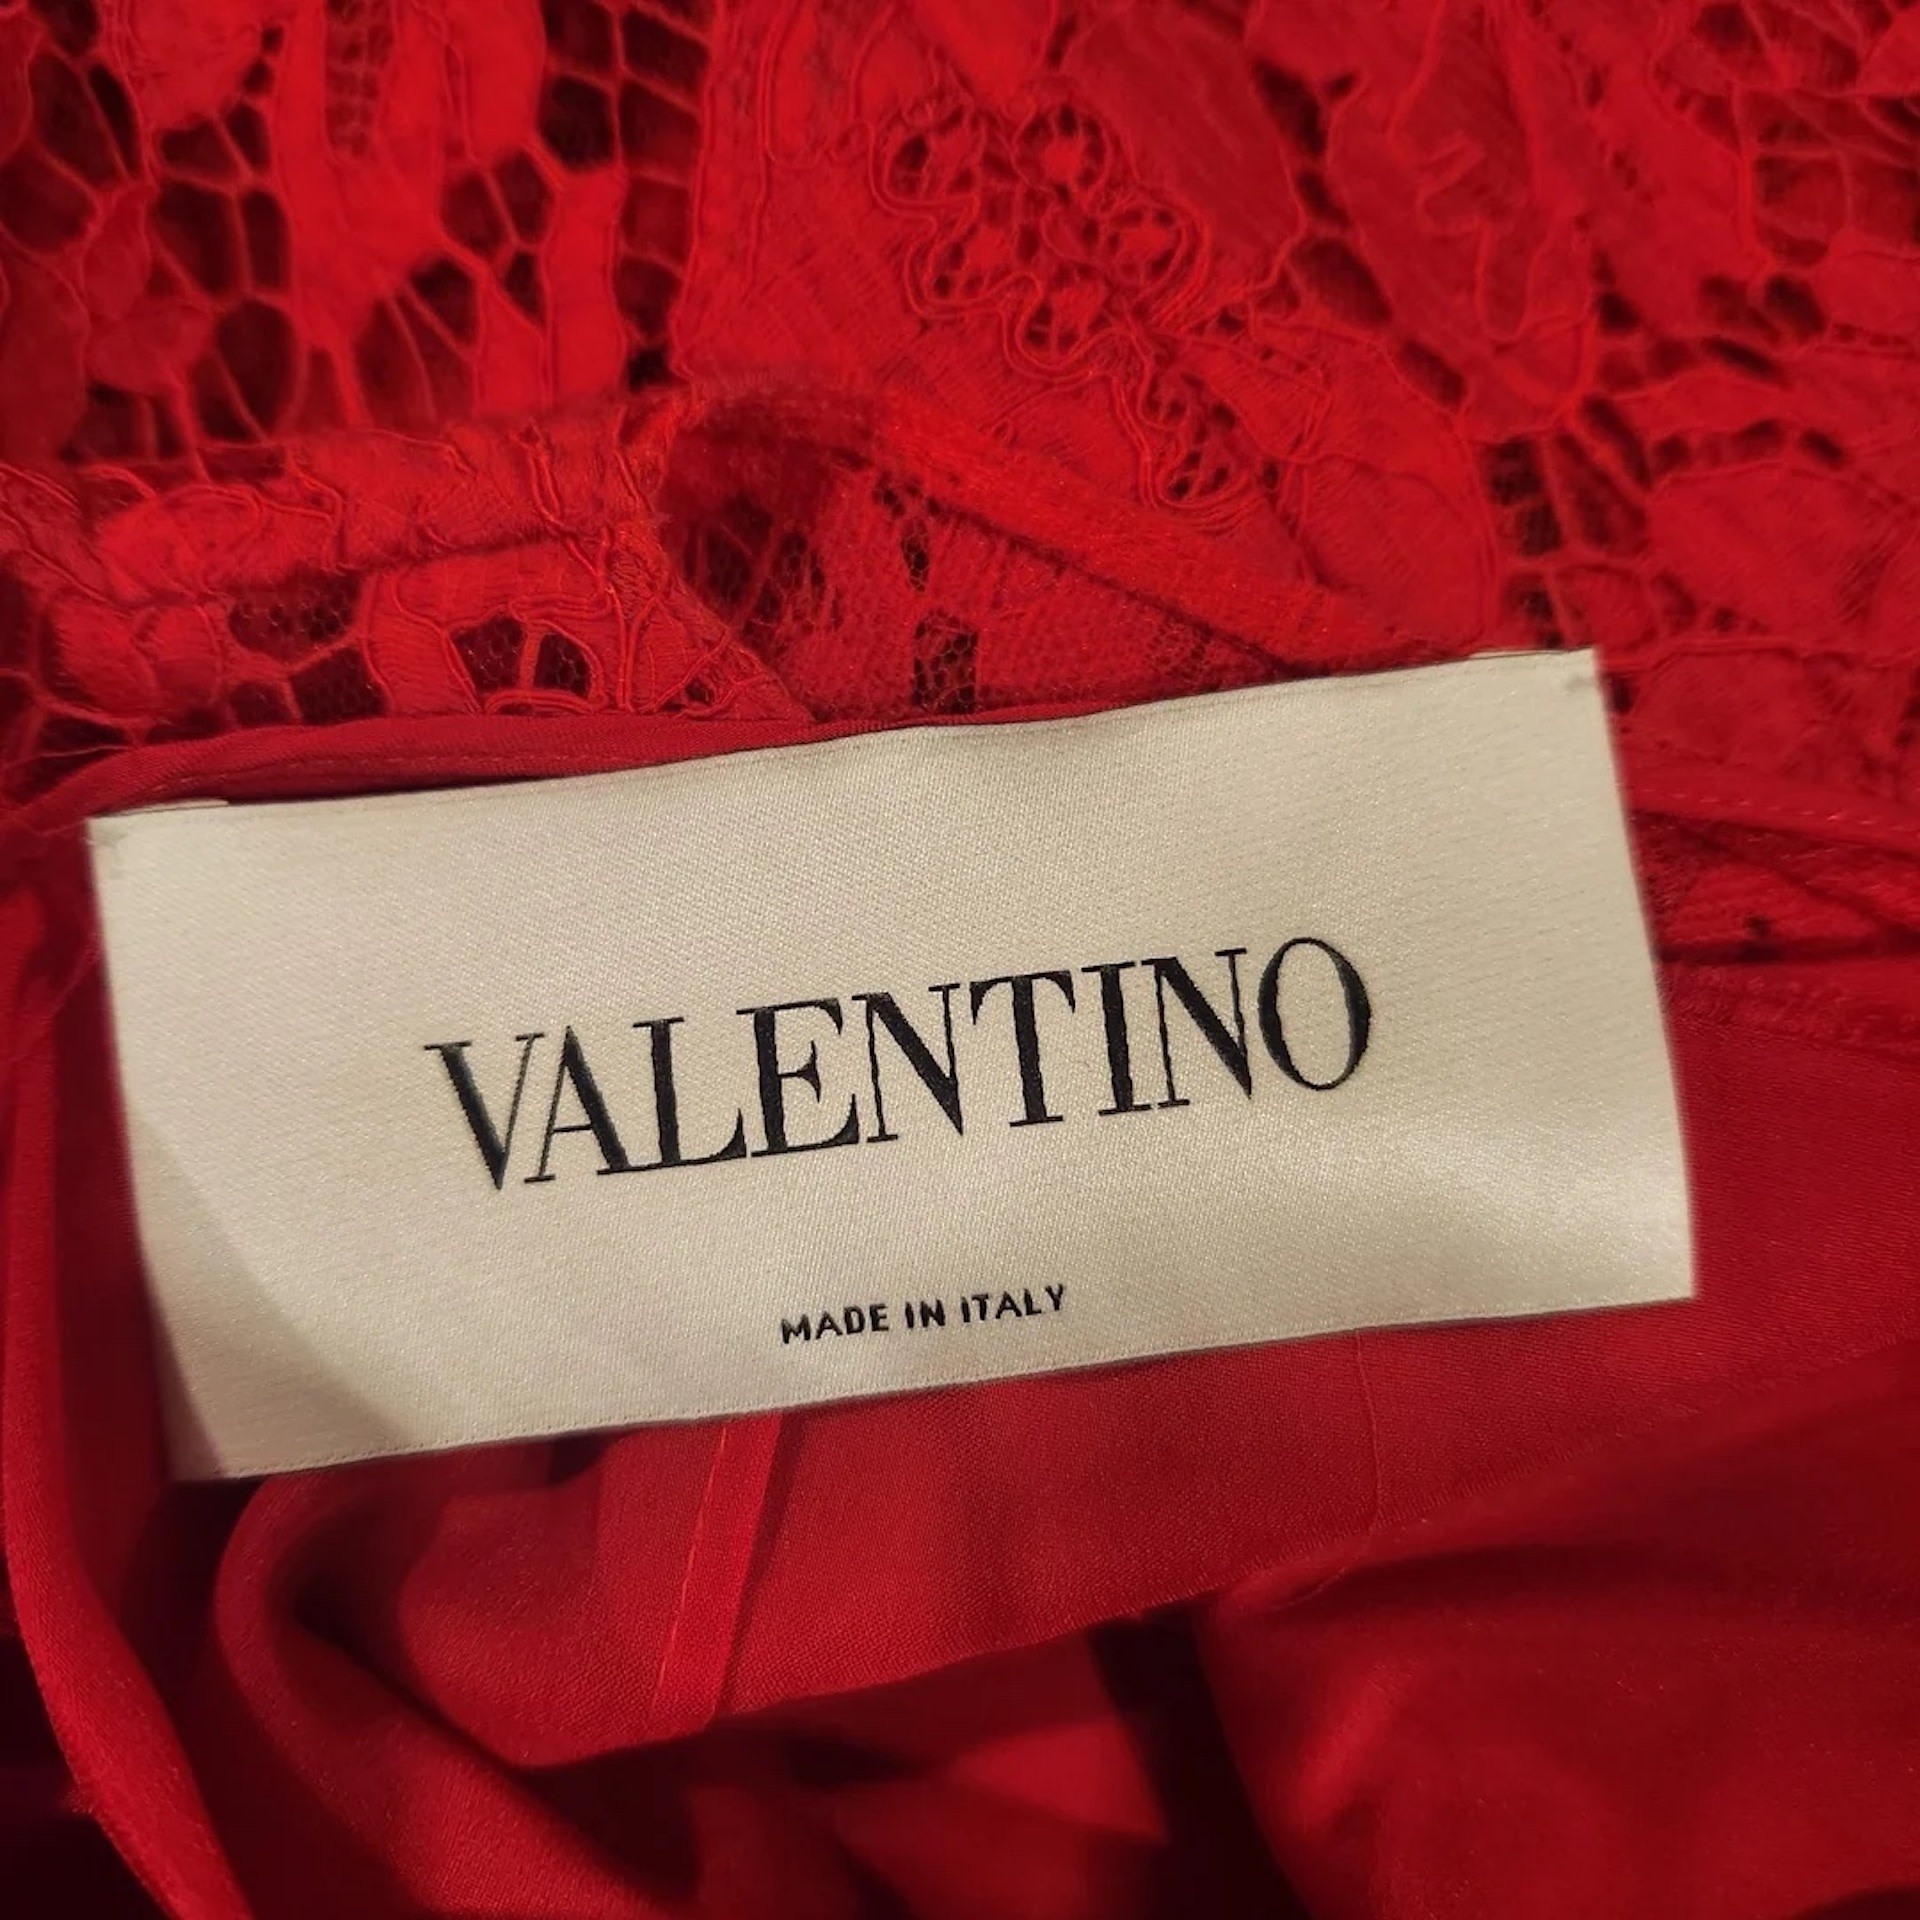 Thrifter finds stunning Valentino dress at Goodwill